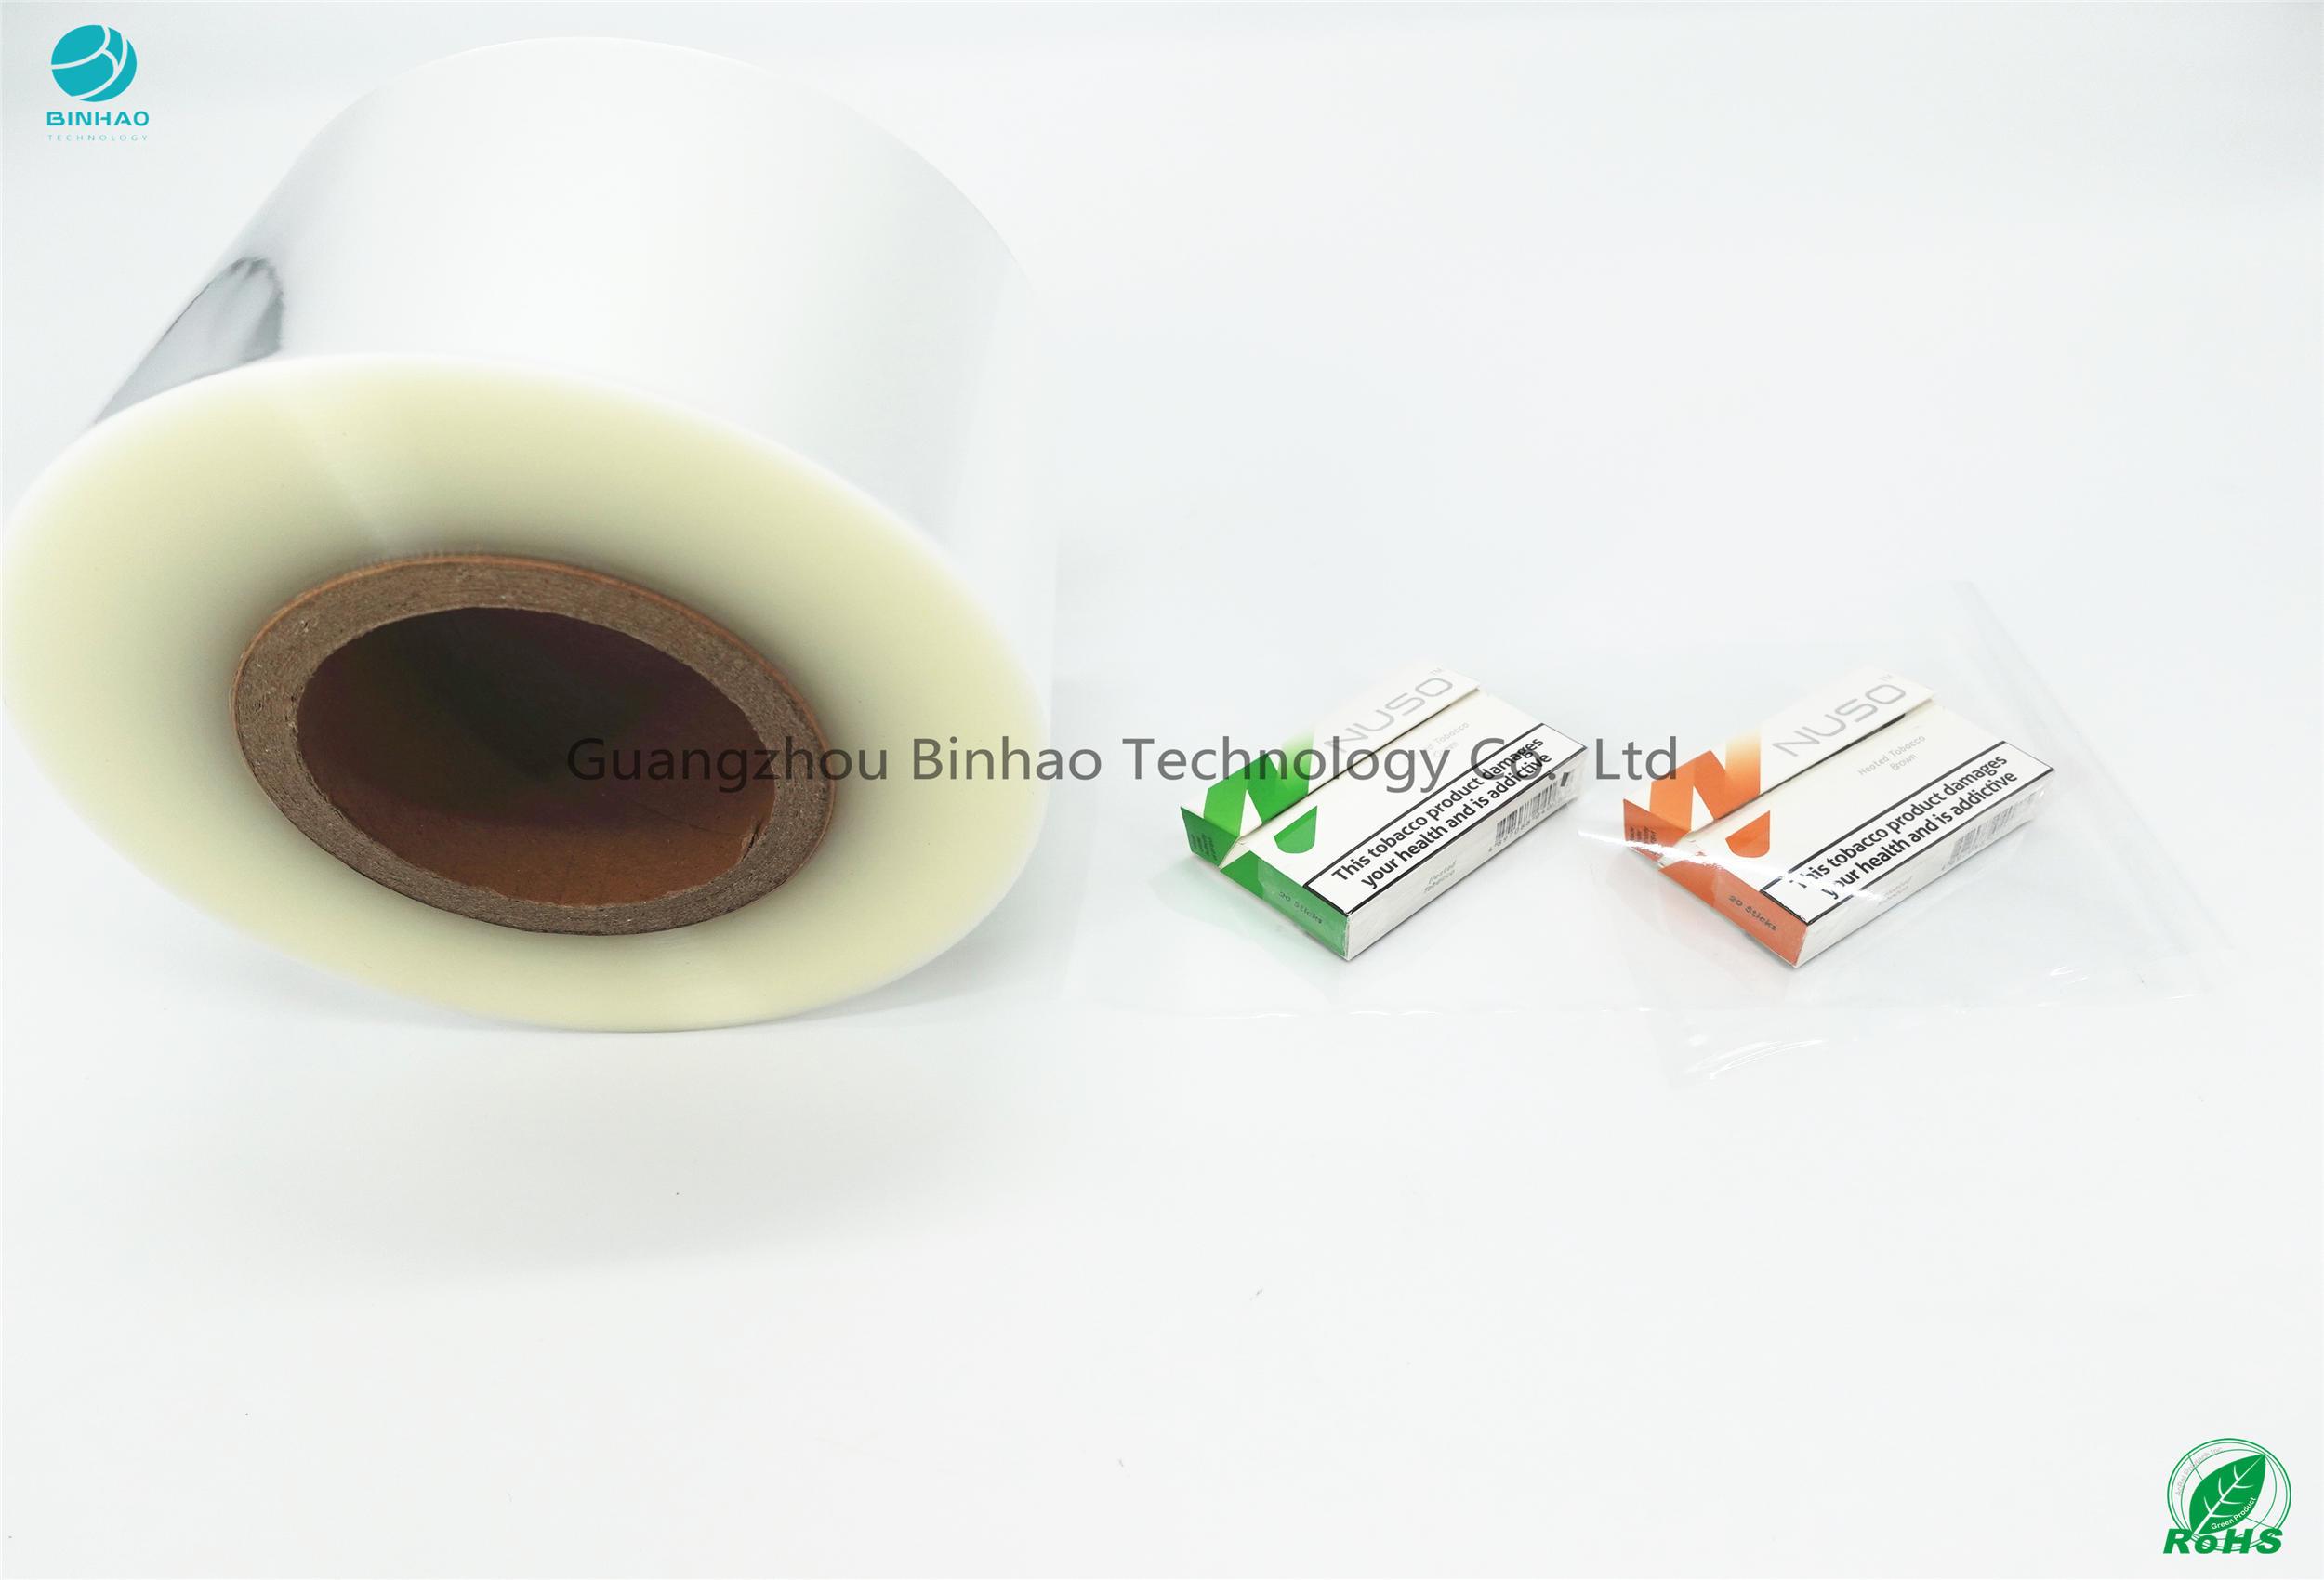 HNB E-Cigarette BOPP Film Paket Tembakau Bahan Inti Kertas 76mm